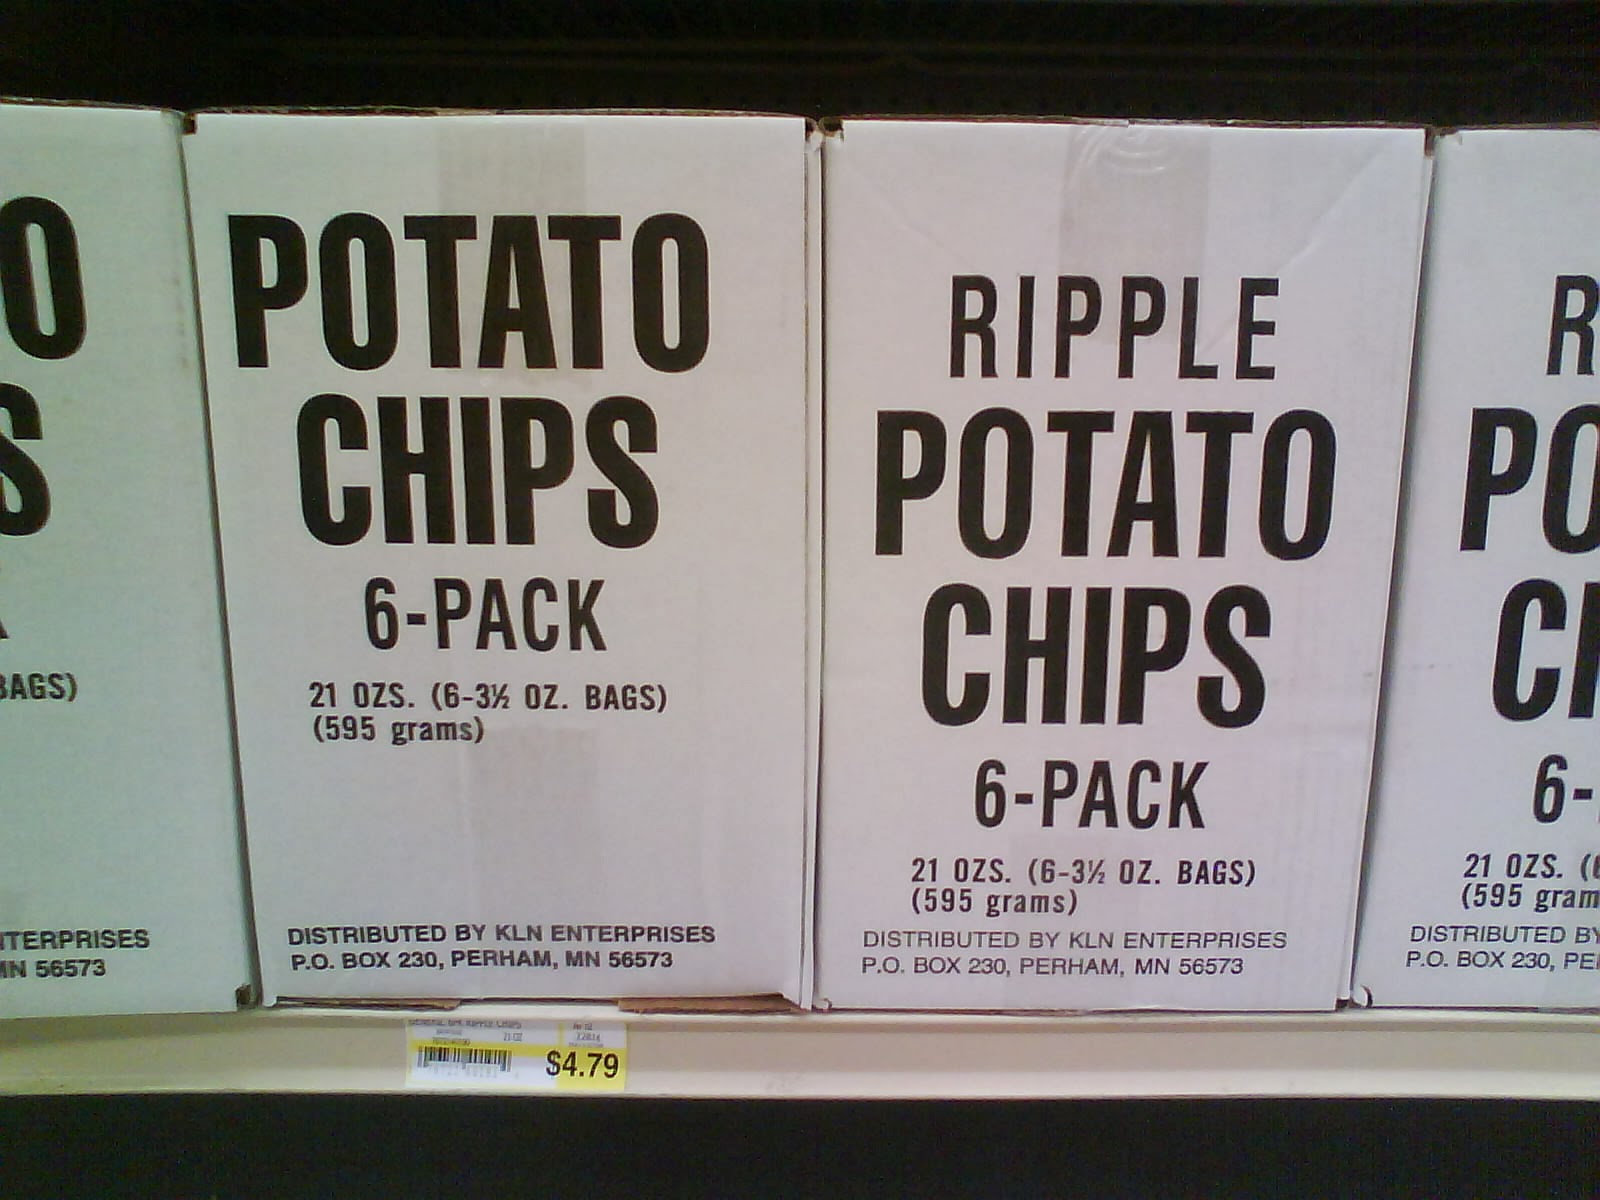 chips.jpg